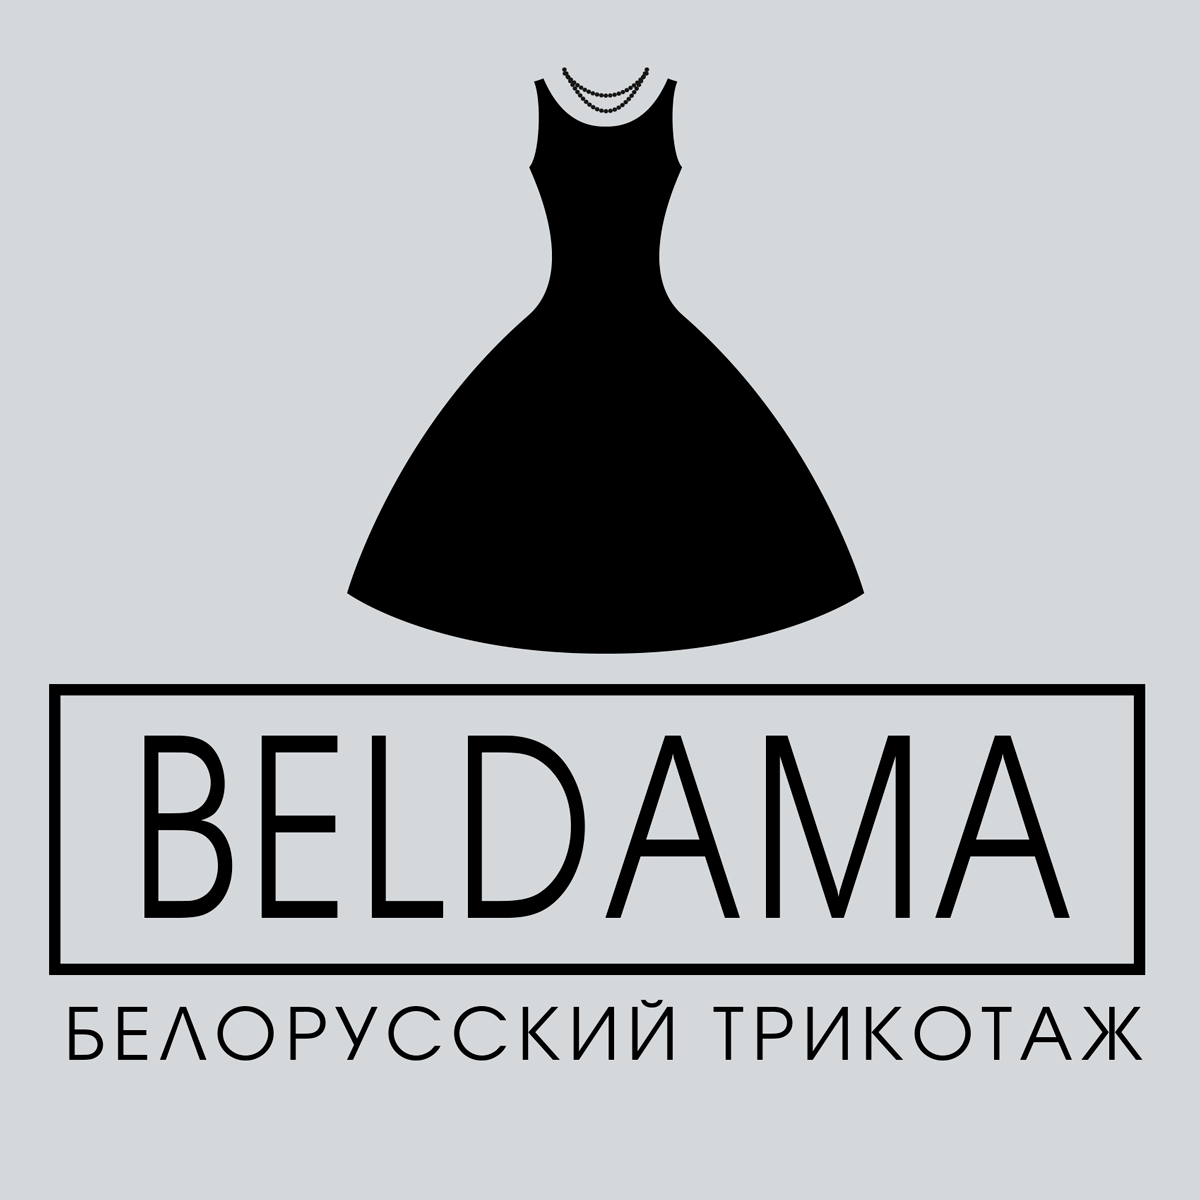 интернет-магазин beldama.by